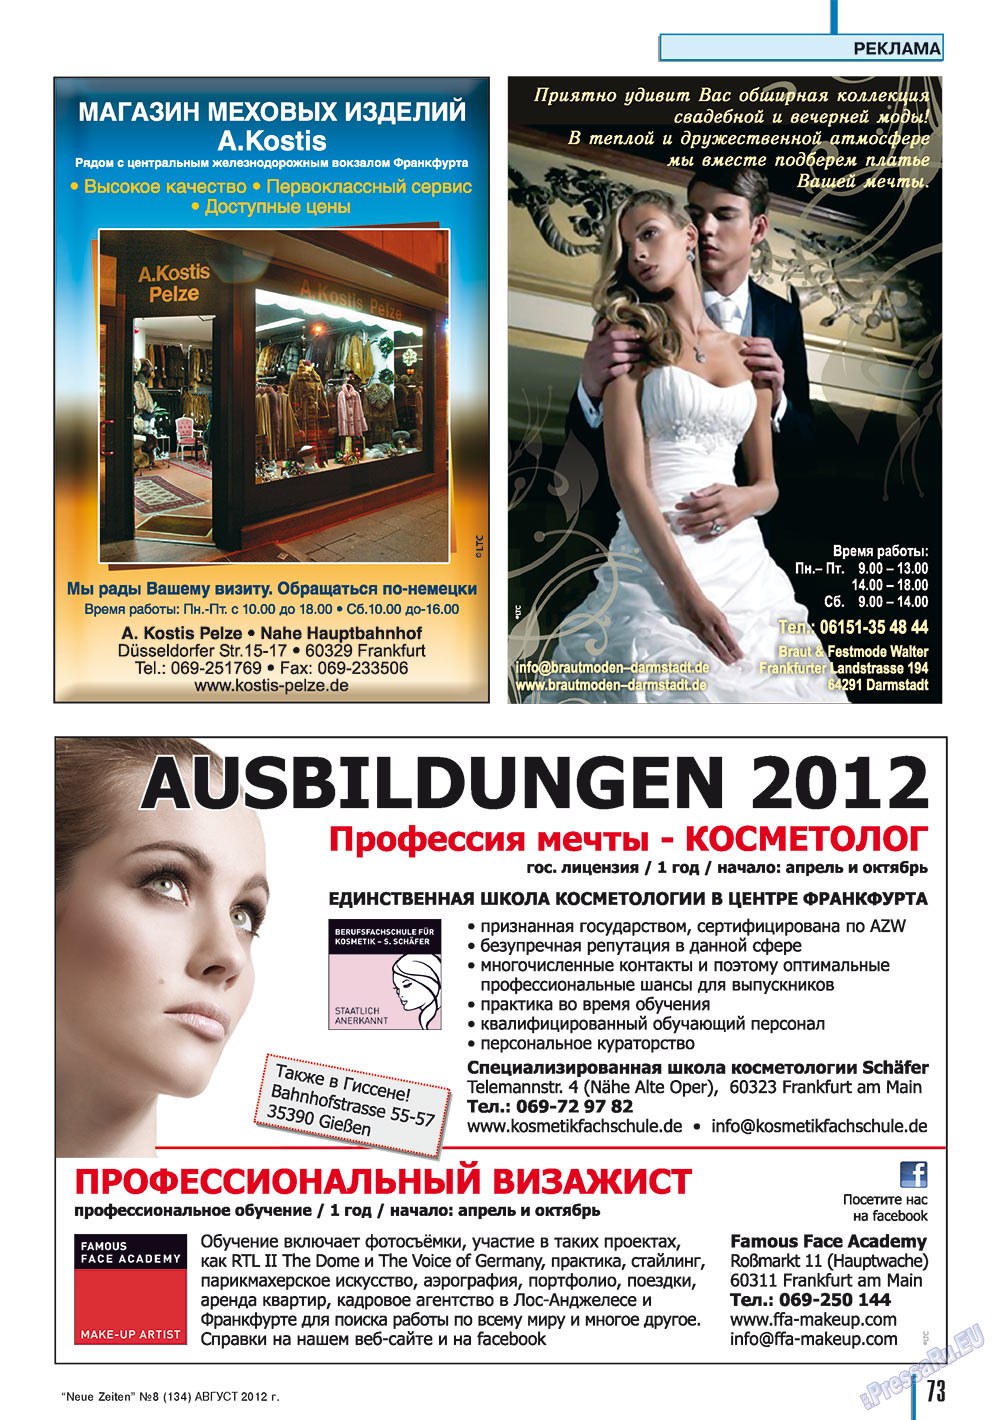 Neue Zeiten (журнал). 2012 год, номер 8, стр. 73